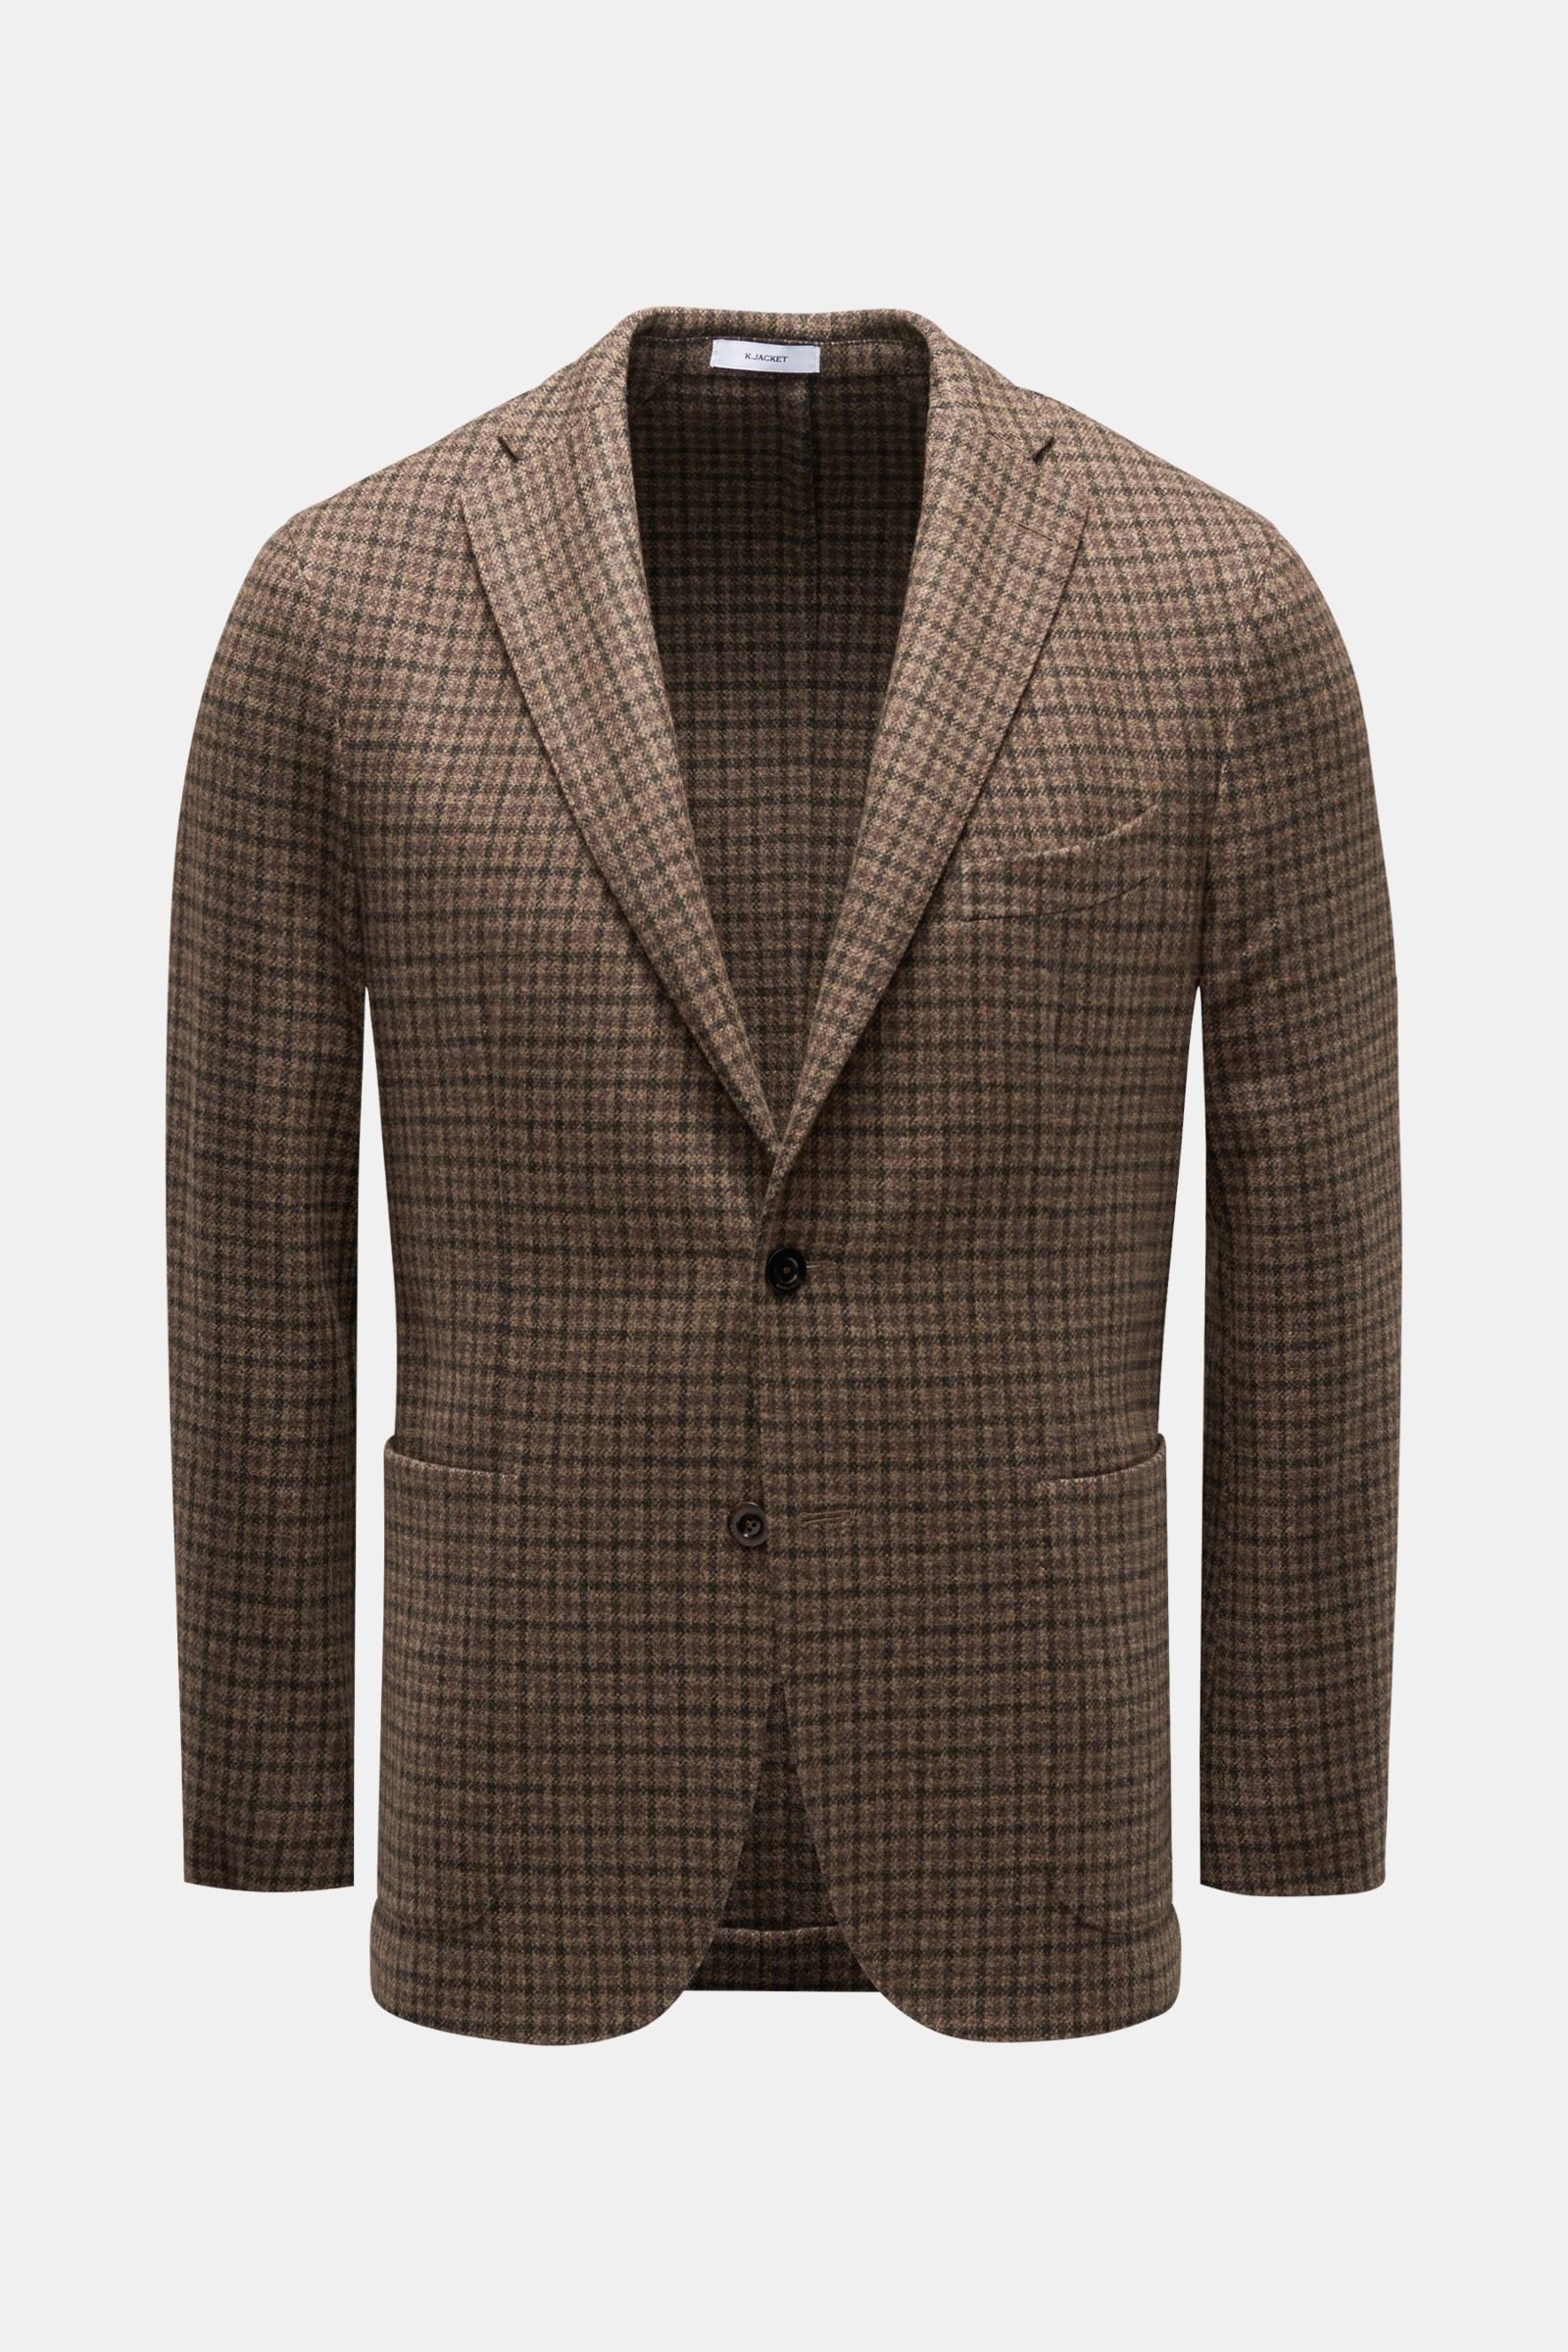 Smart-casual jacket 'K. Jacket' brown/dark brown checked